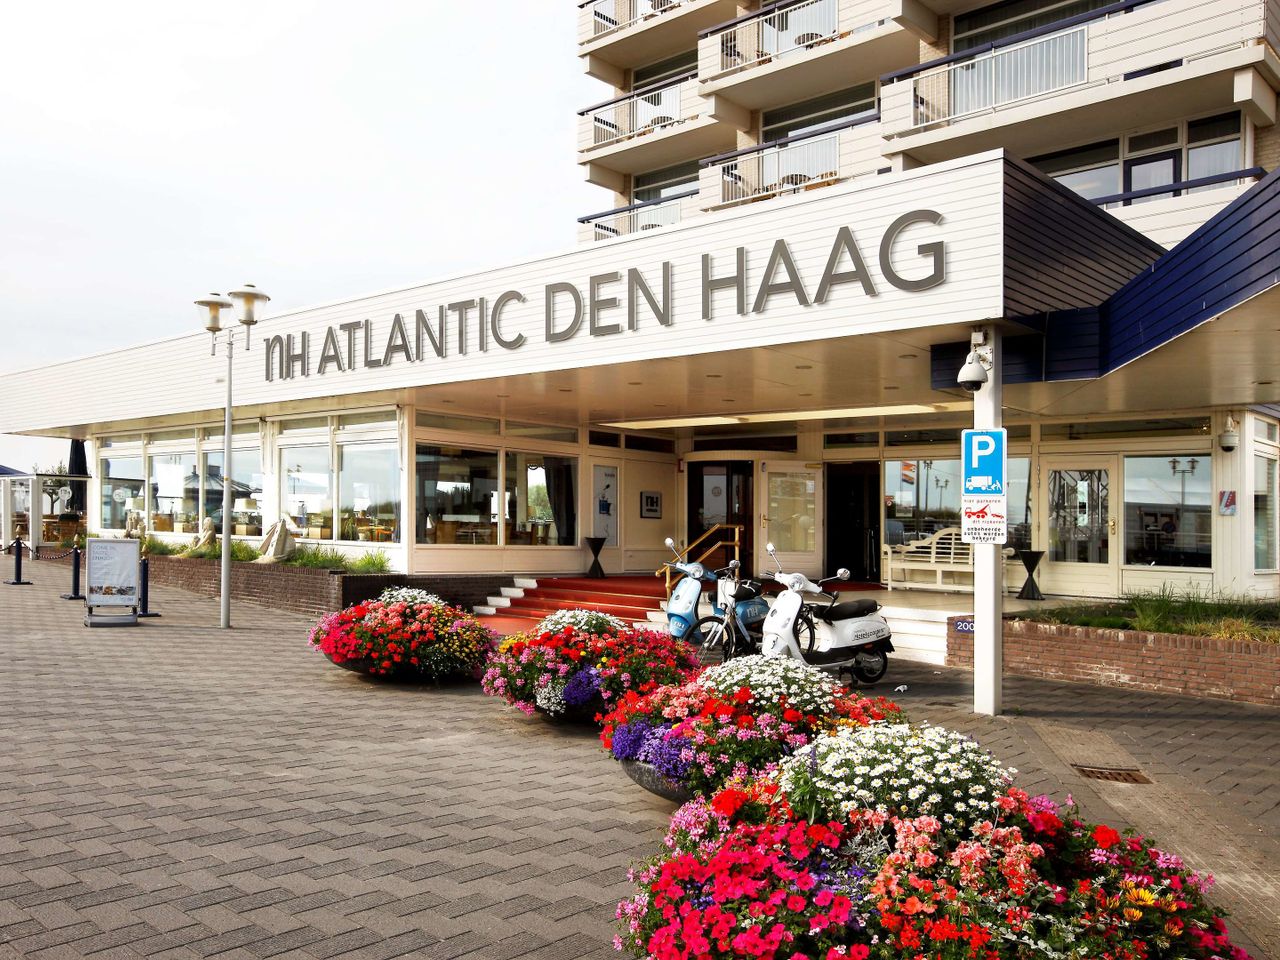 6 Tage im Hotel NH Atlantic Den Haag 